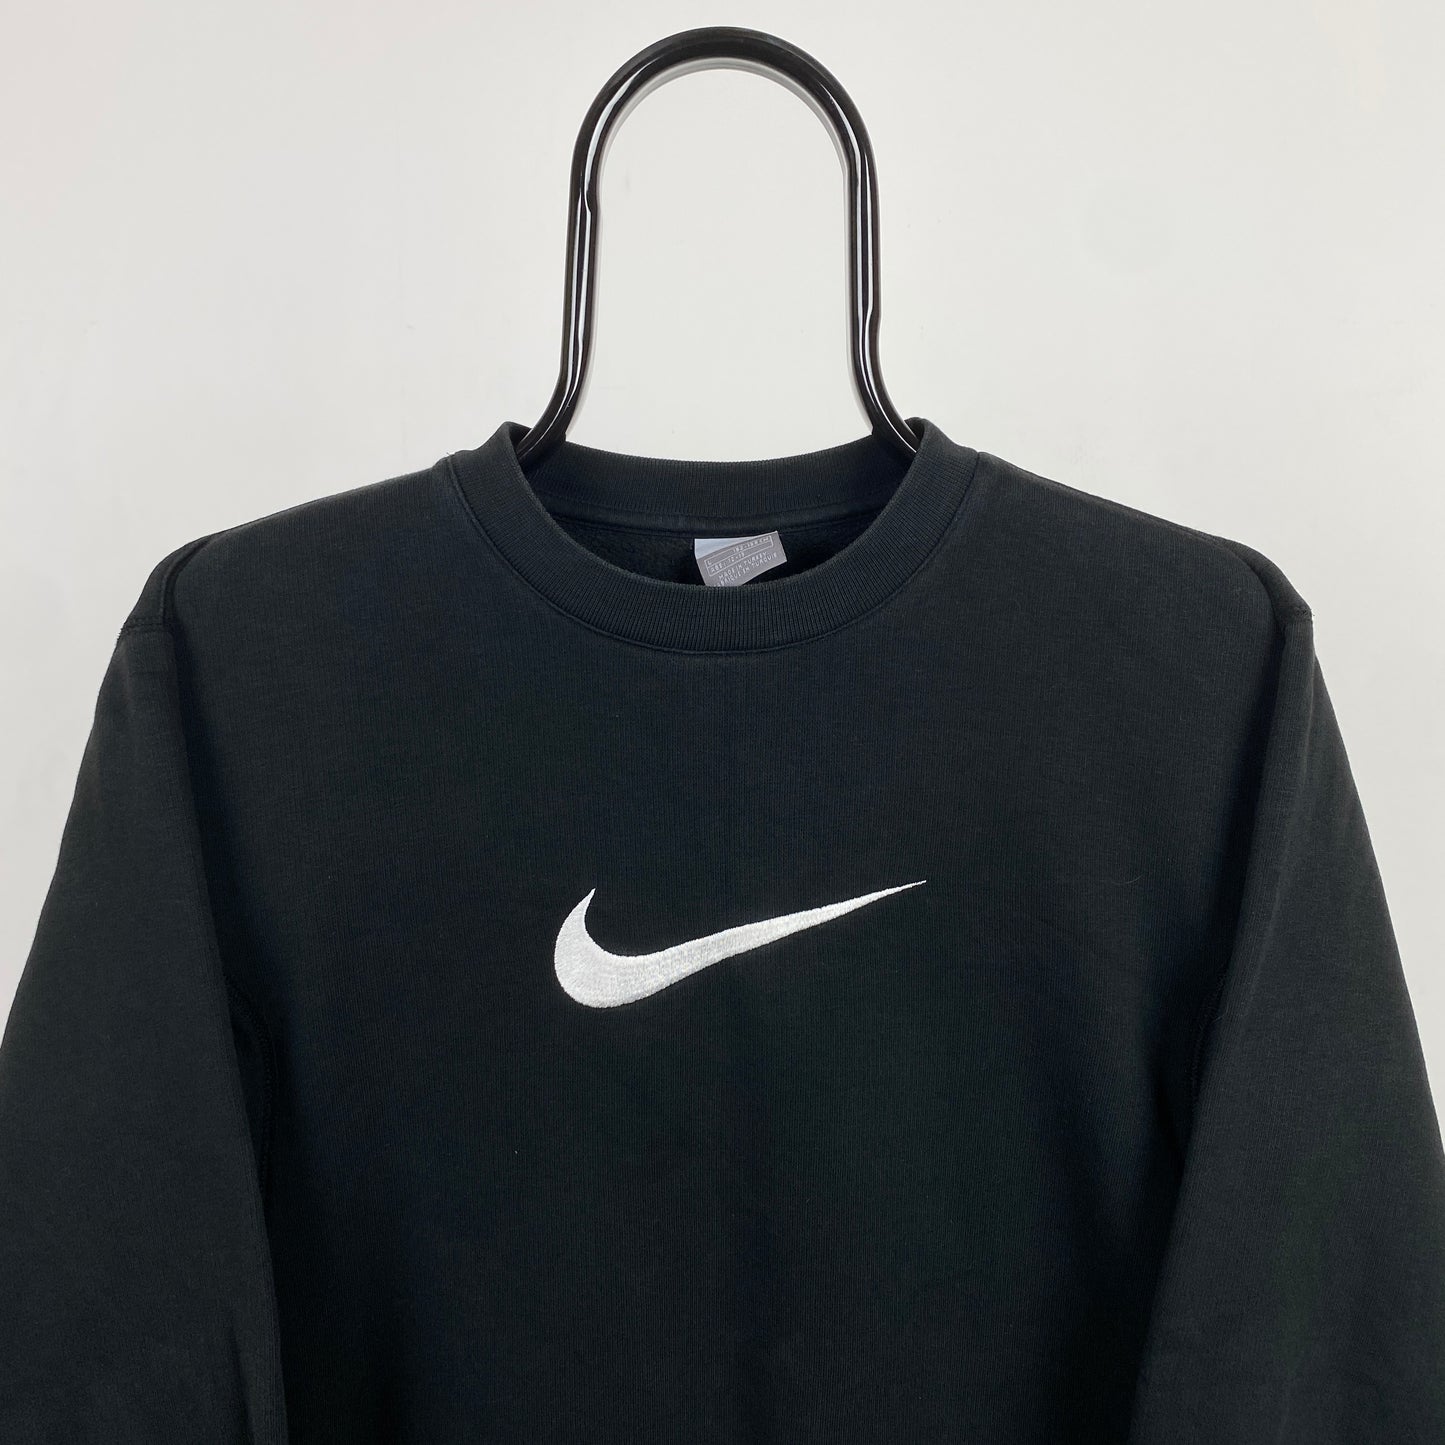 00s Nike Swoosh Sweatshirt Black XS